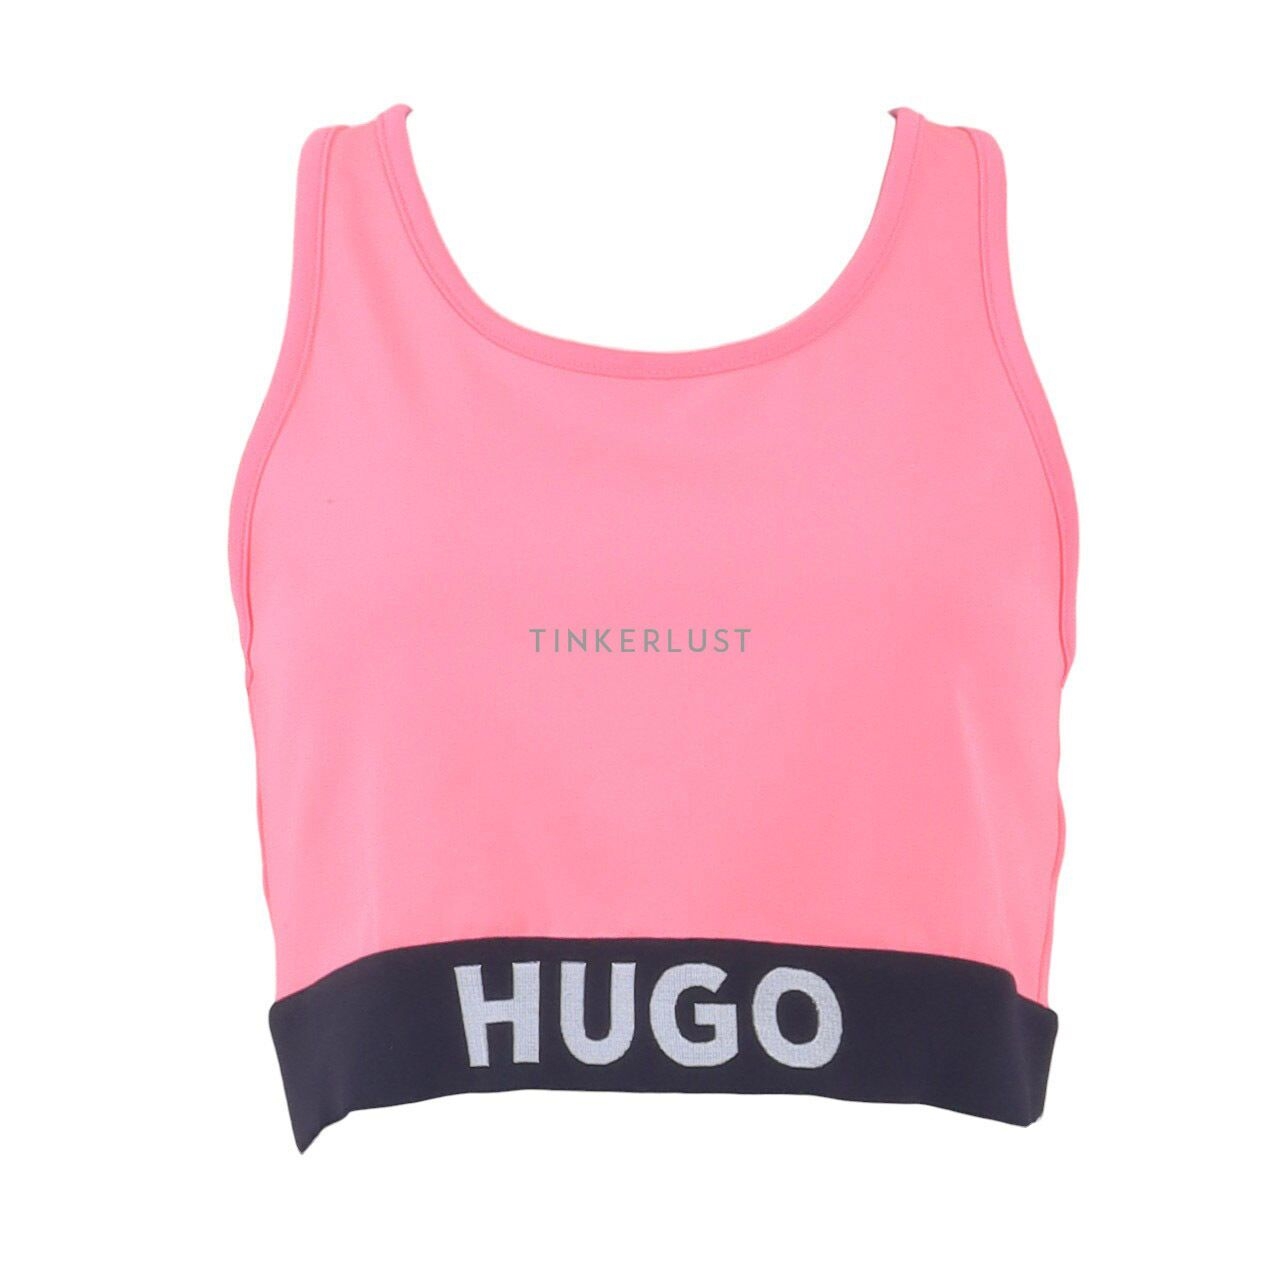 Hugo Boss Pink Sports Top